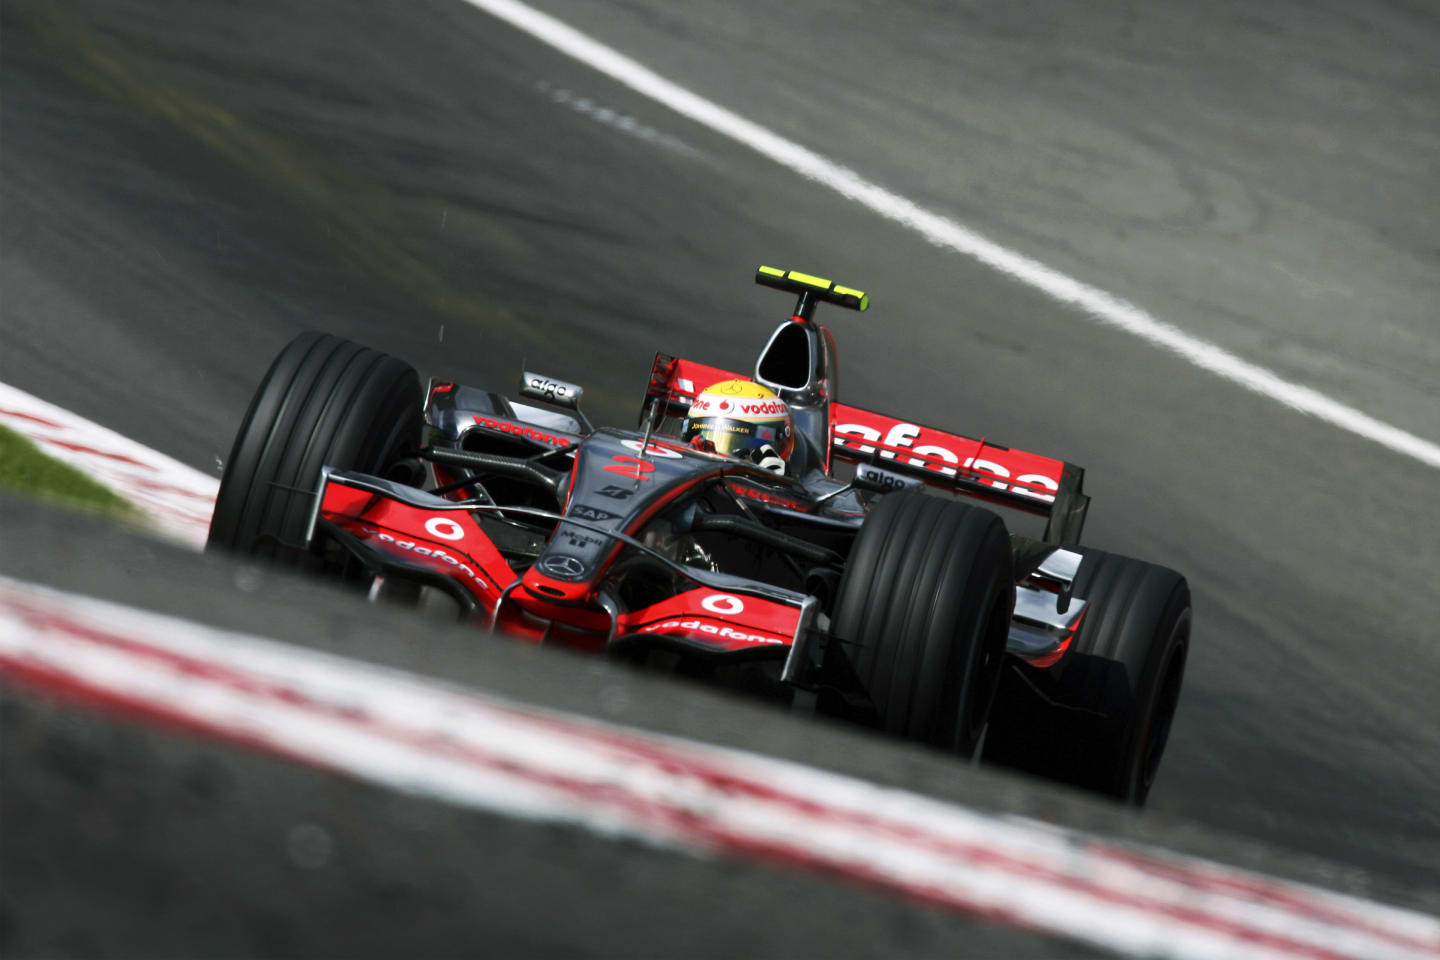 British Formula One driver Lewis Hamilton drives his McLaren MP4-22 V8 Formula One car through the